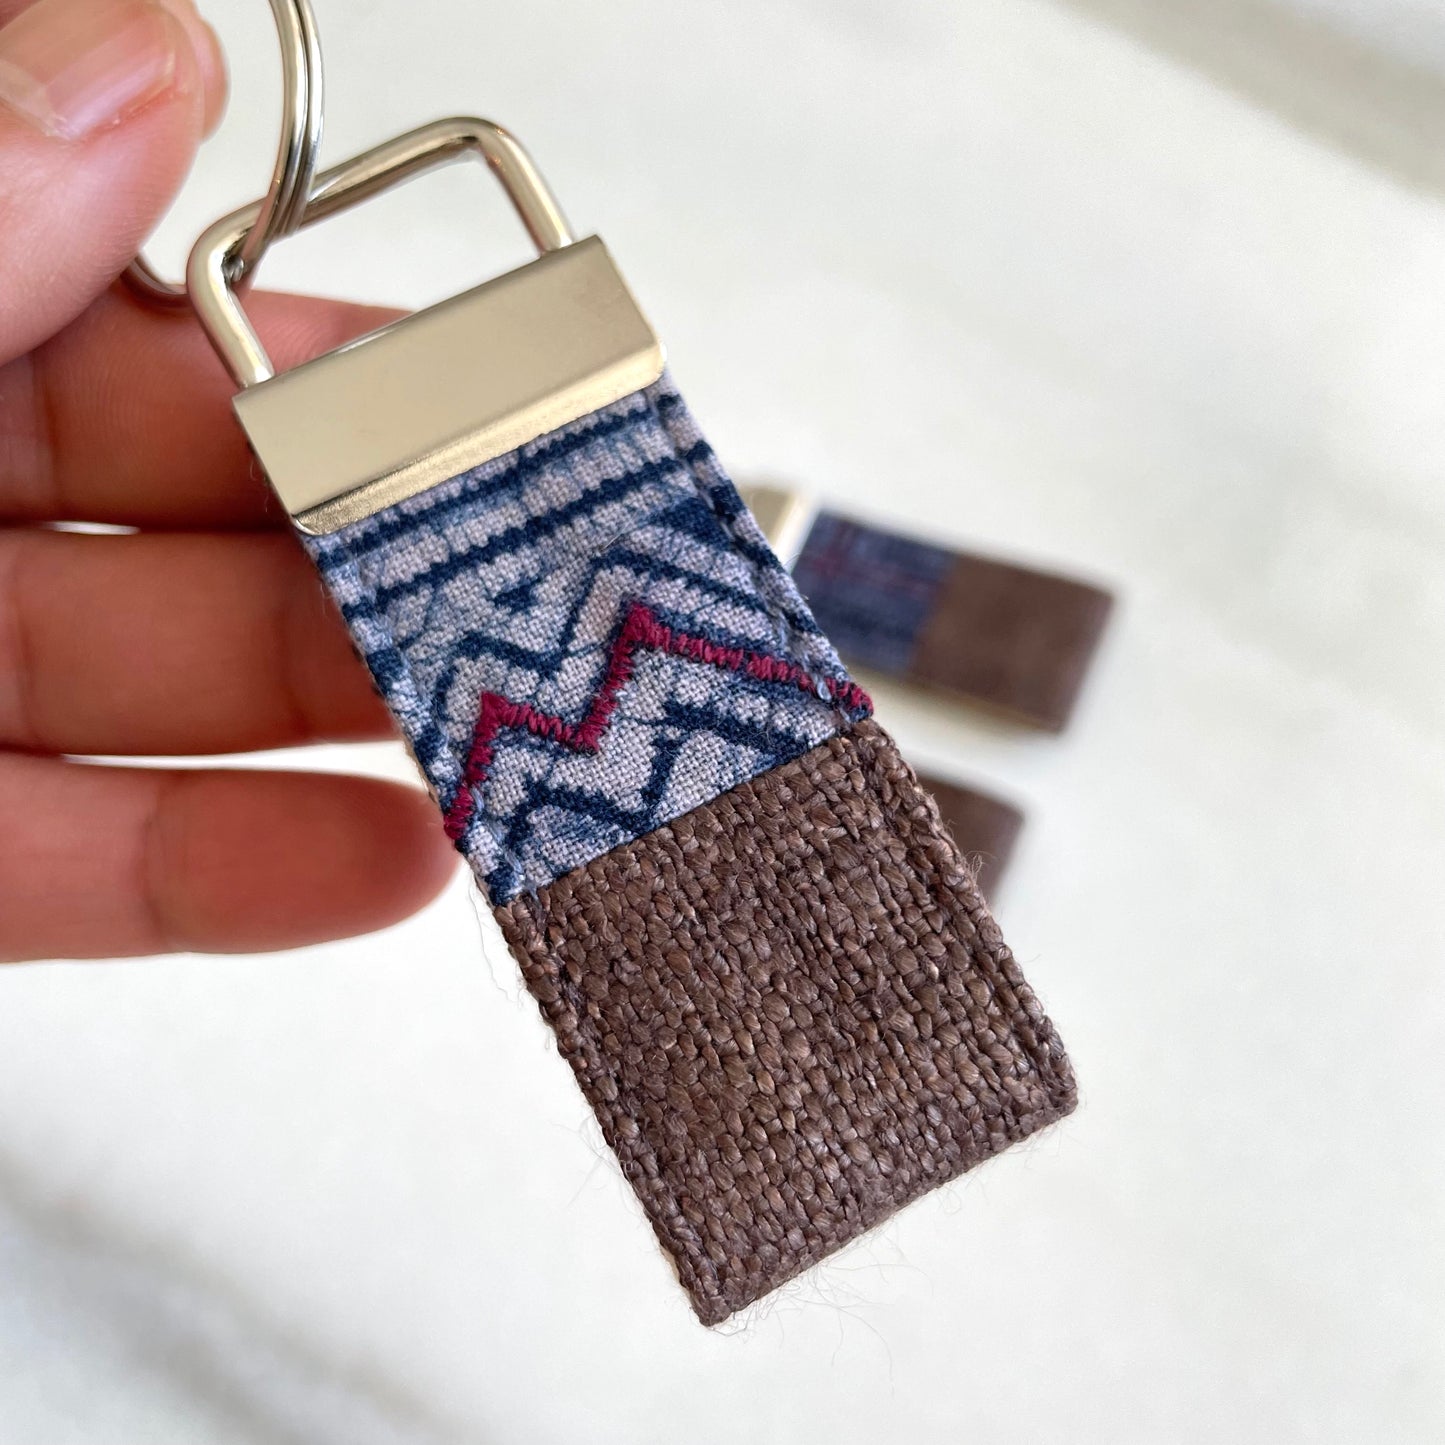 Dark brown hemp fabric keychain with vintage batik patch, stainless metal key fob